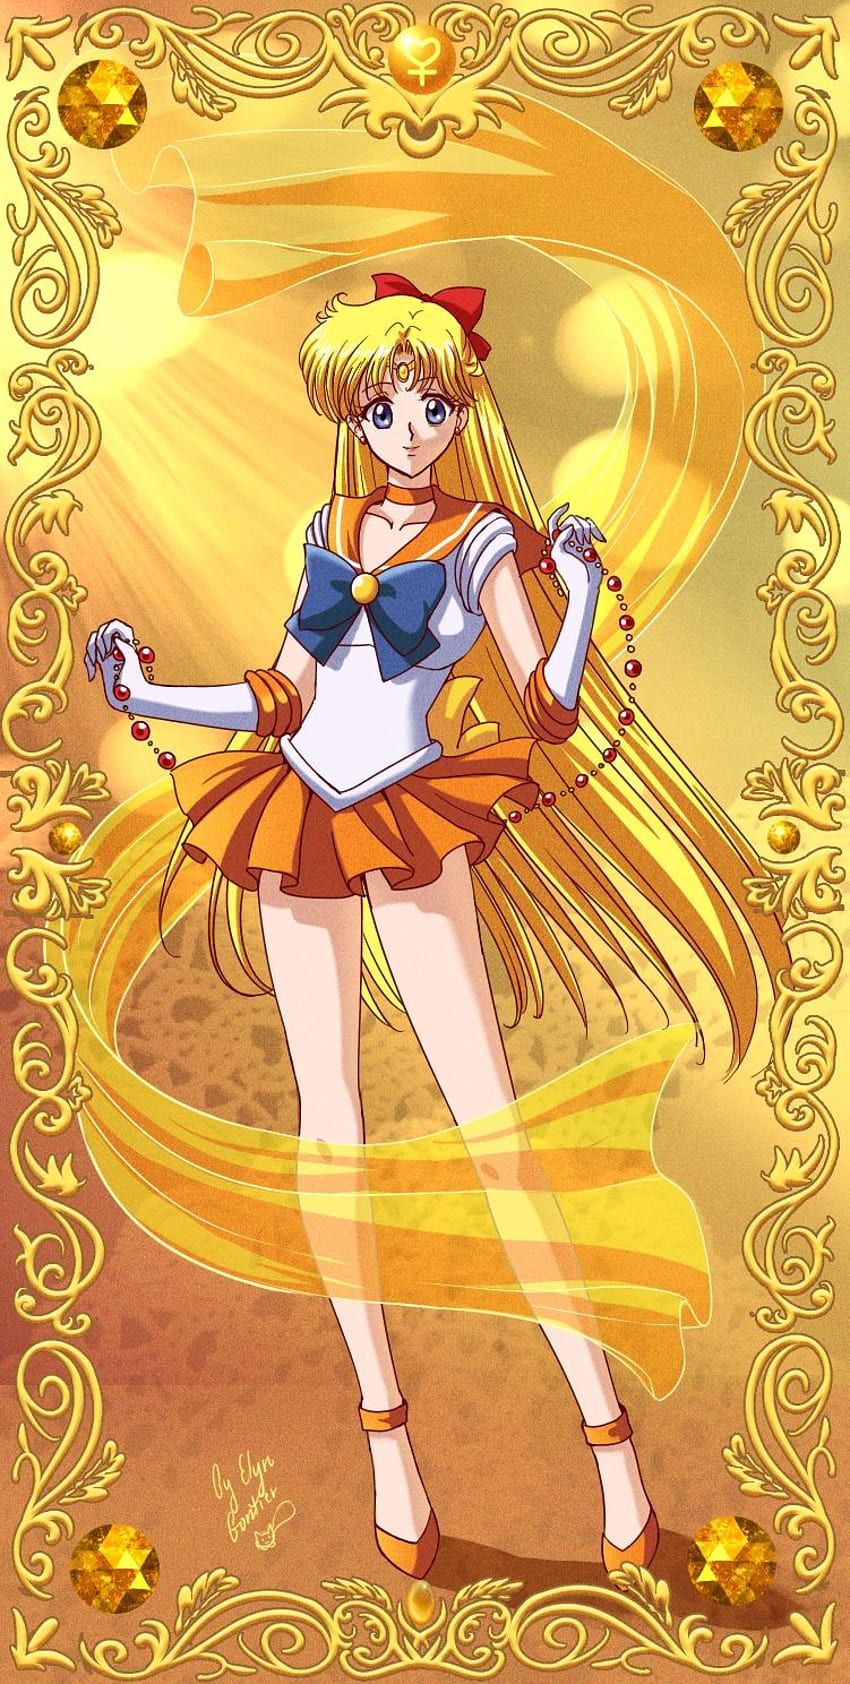 Sailor moon, sailor Venus, and sailor venus wallpaper image - Sailor Venus